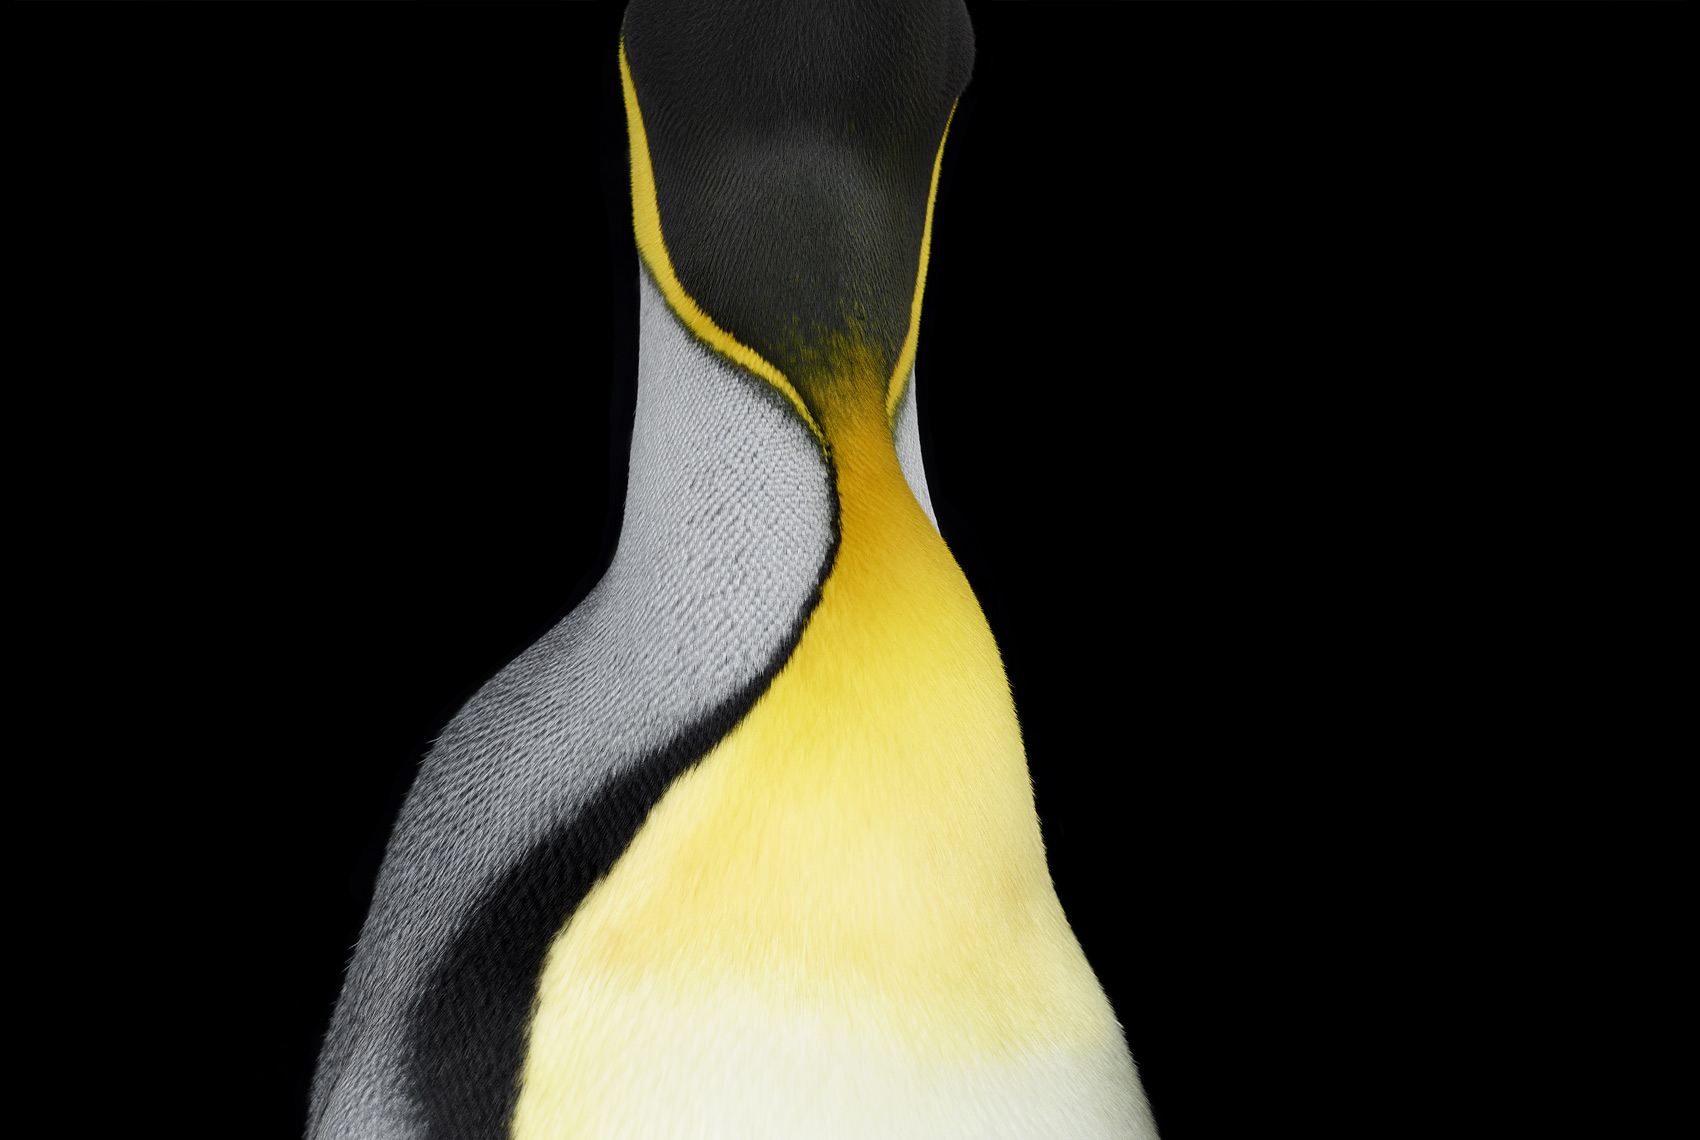 King penguin abstract portrait by fine art animal photographer Brad Wilson